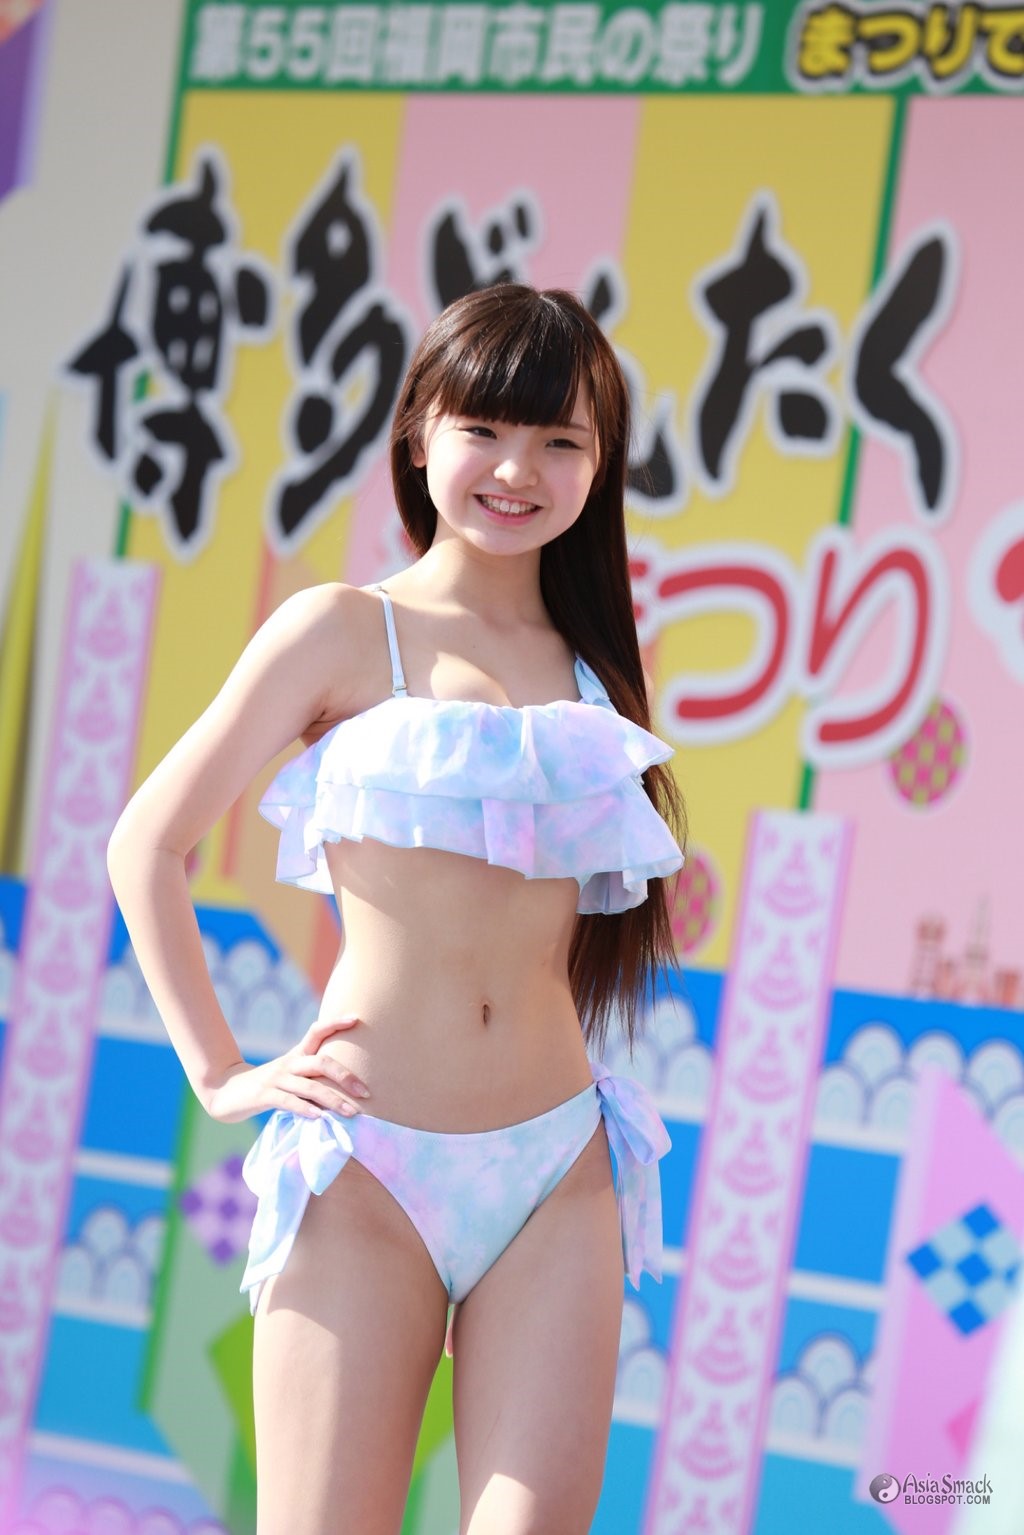 Very cute japanese girl 12the